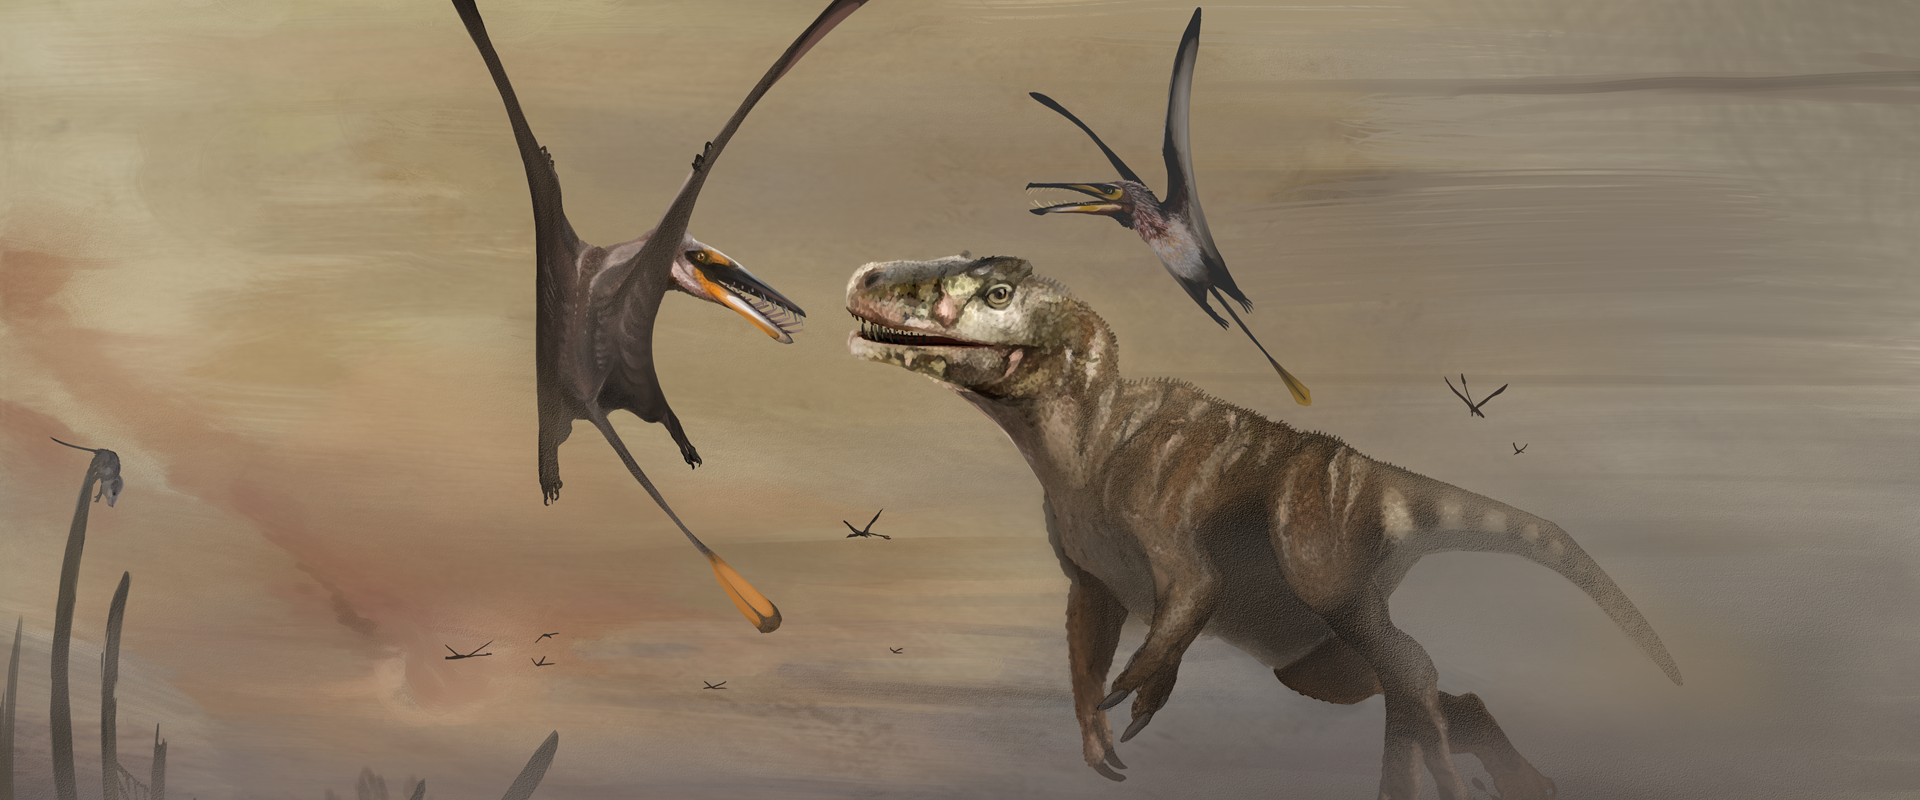 Skye high: Jurassic pterosaur discovery, pterodactyl vs pteranodon 